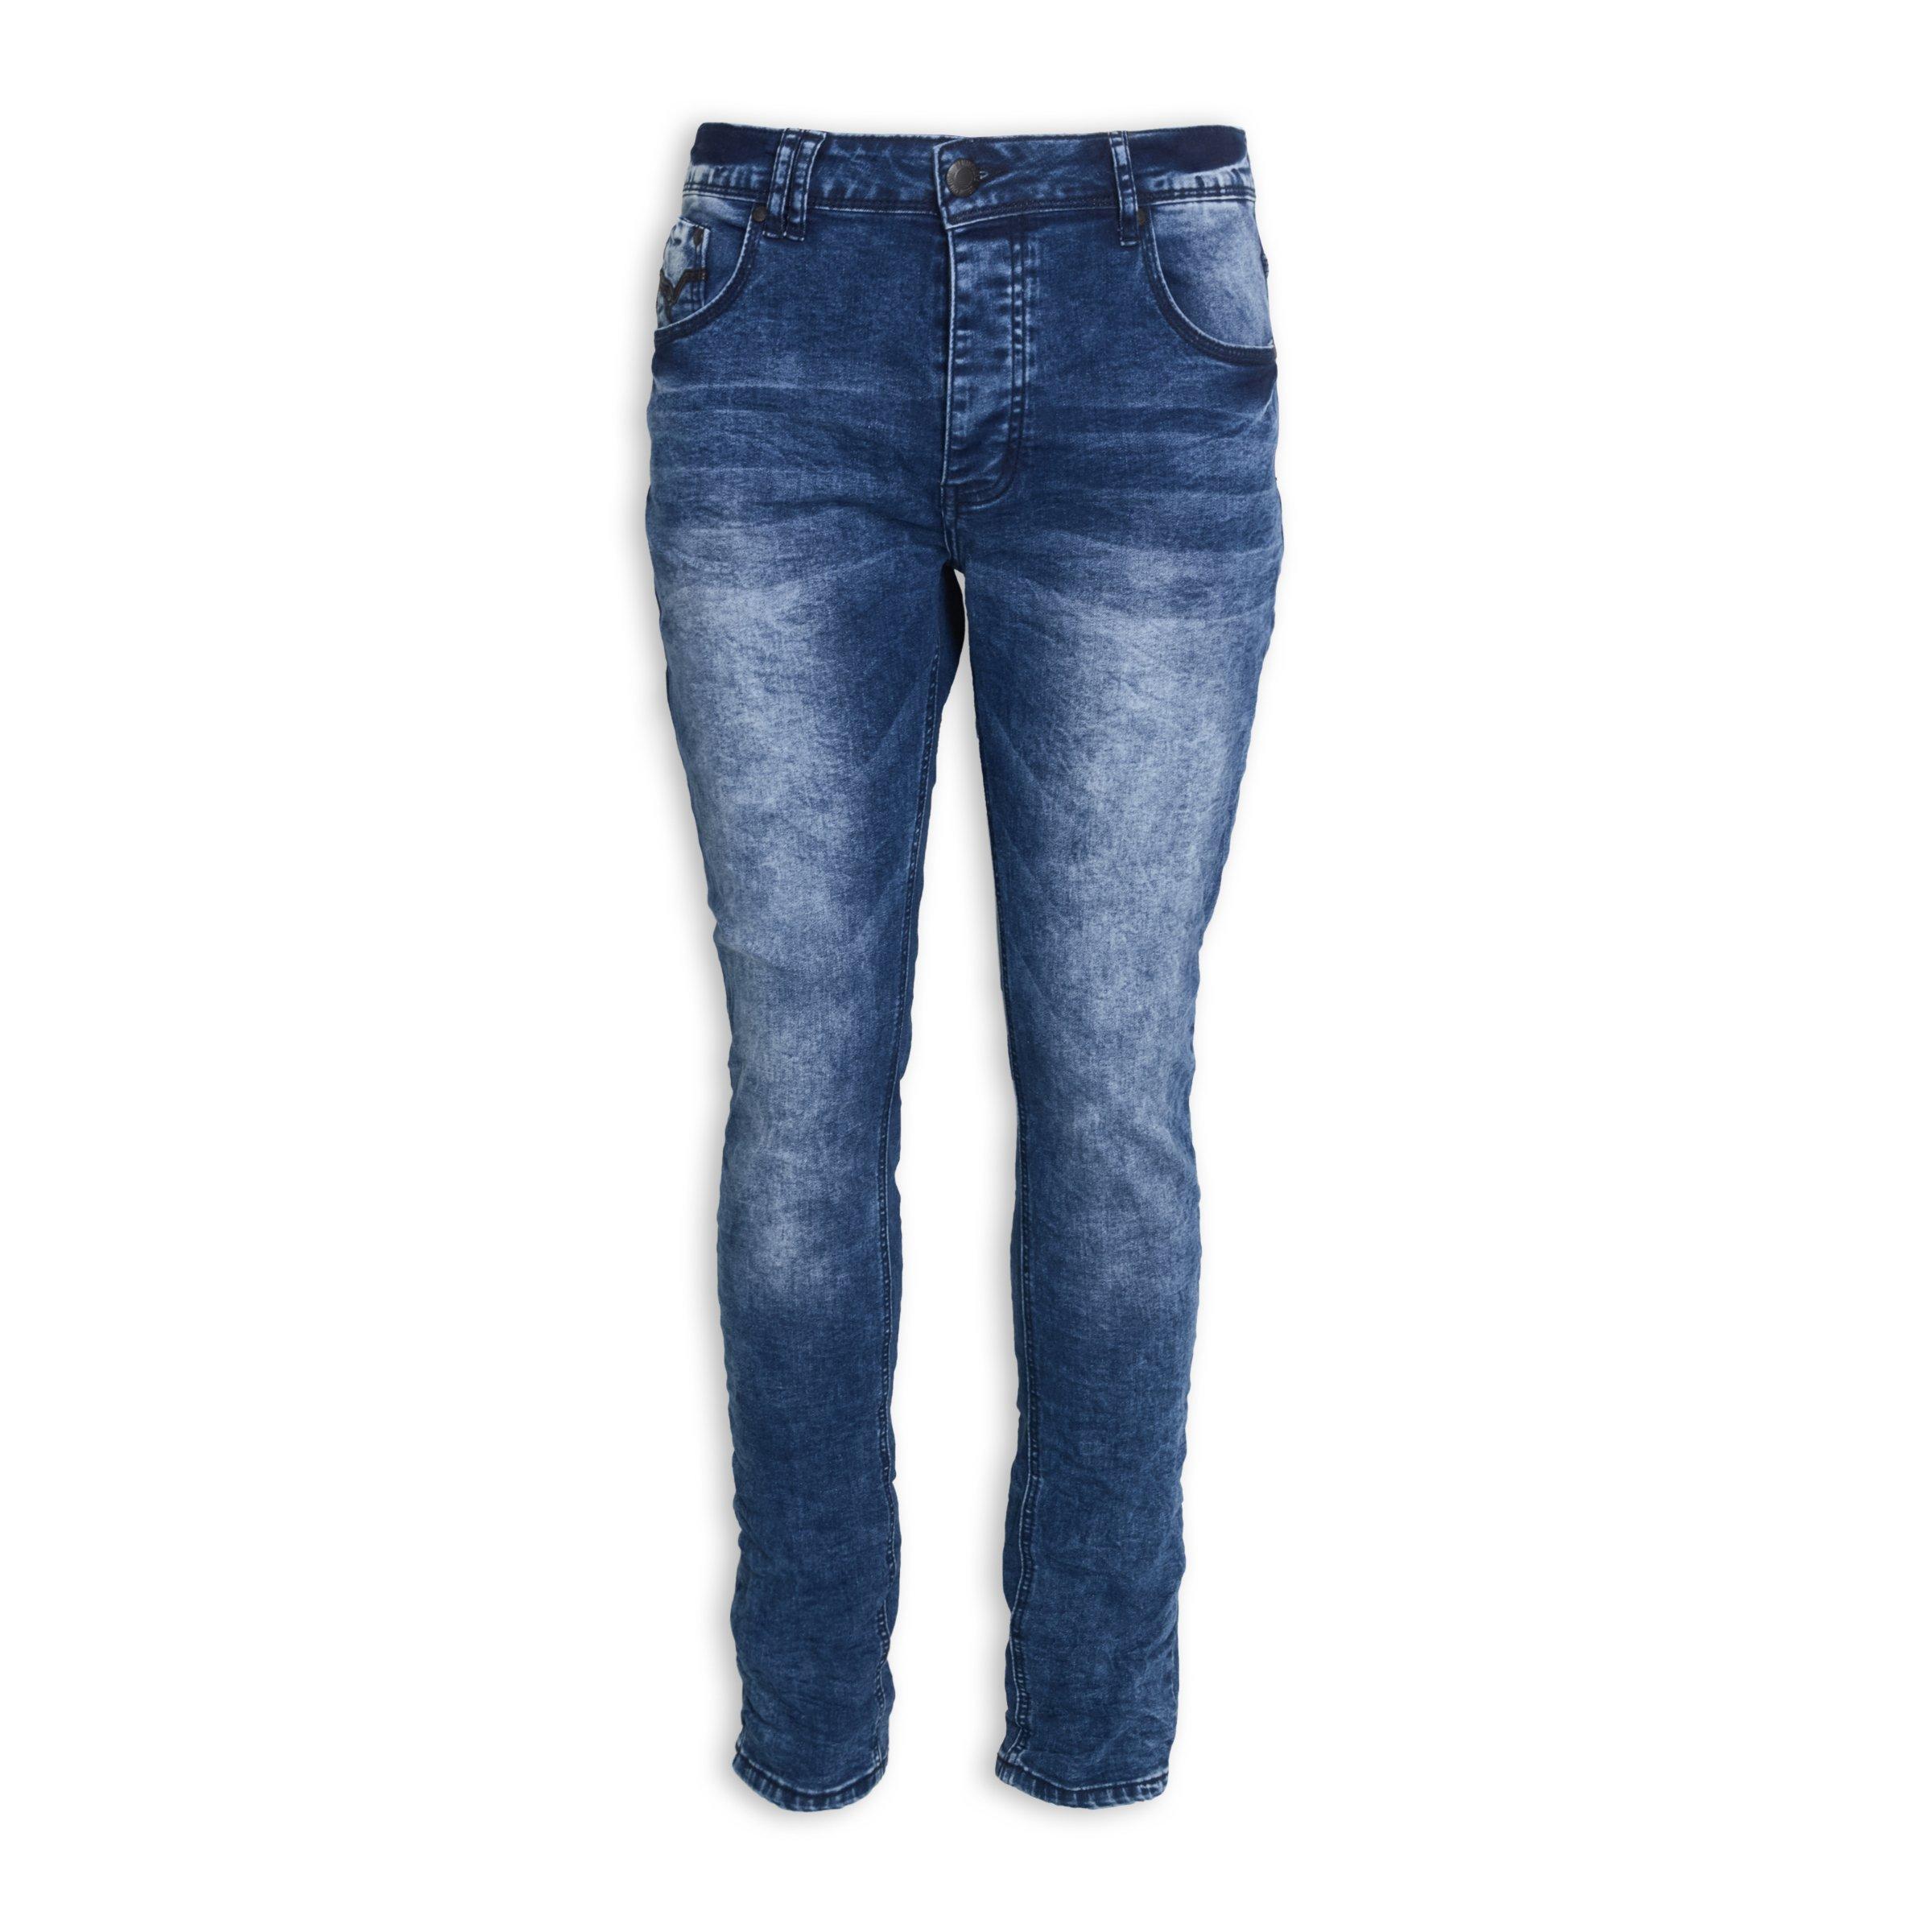 Buy Hemisphere Indigo Skinny Jeans Online | Truworths